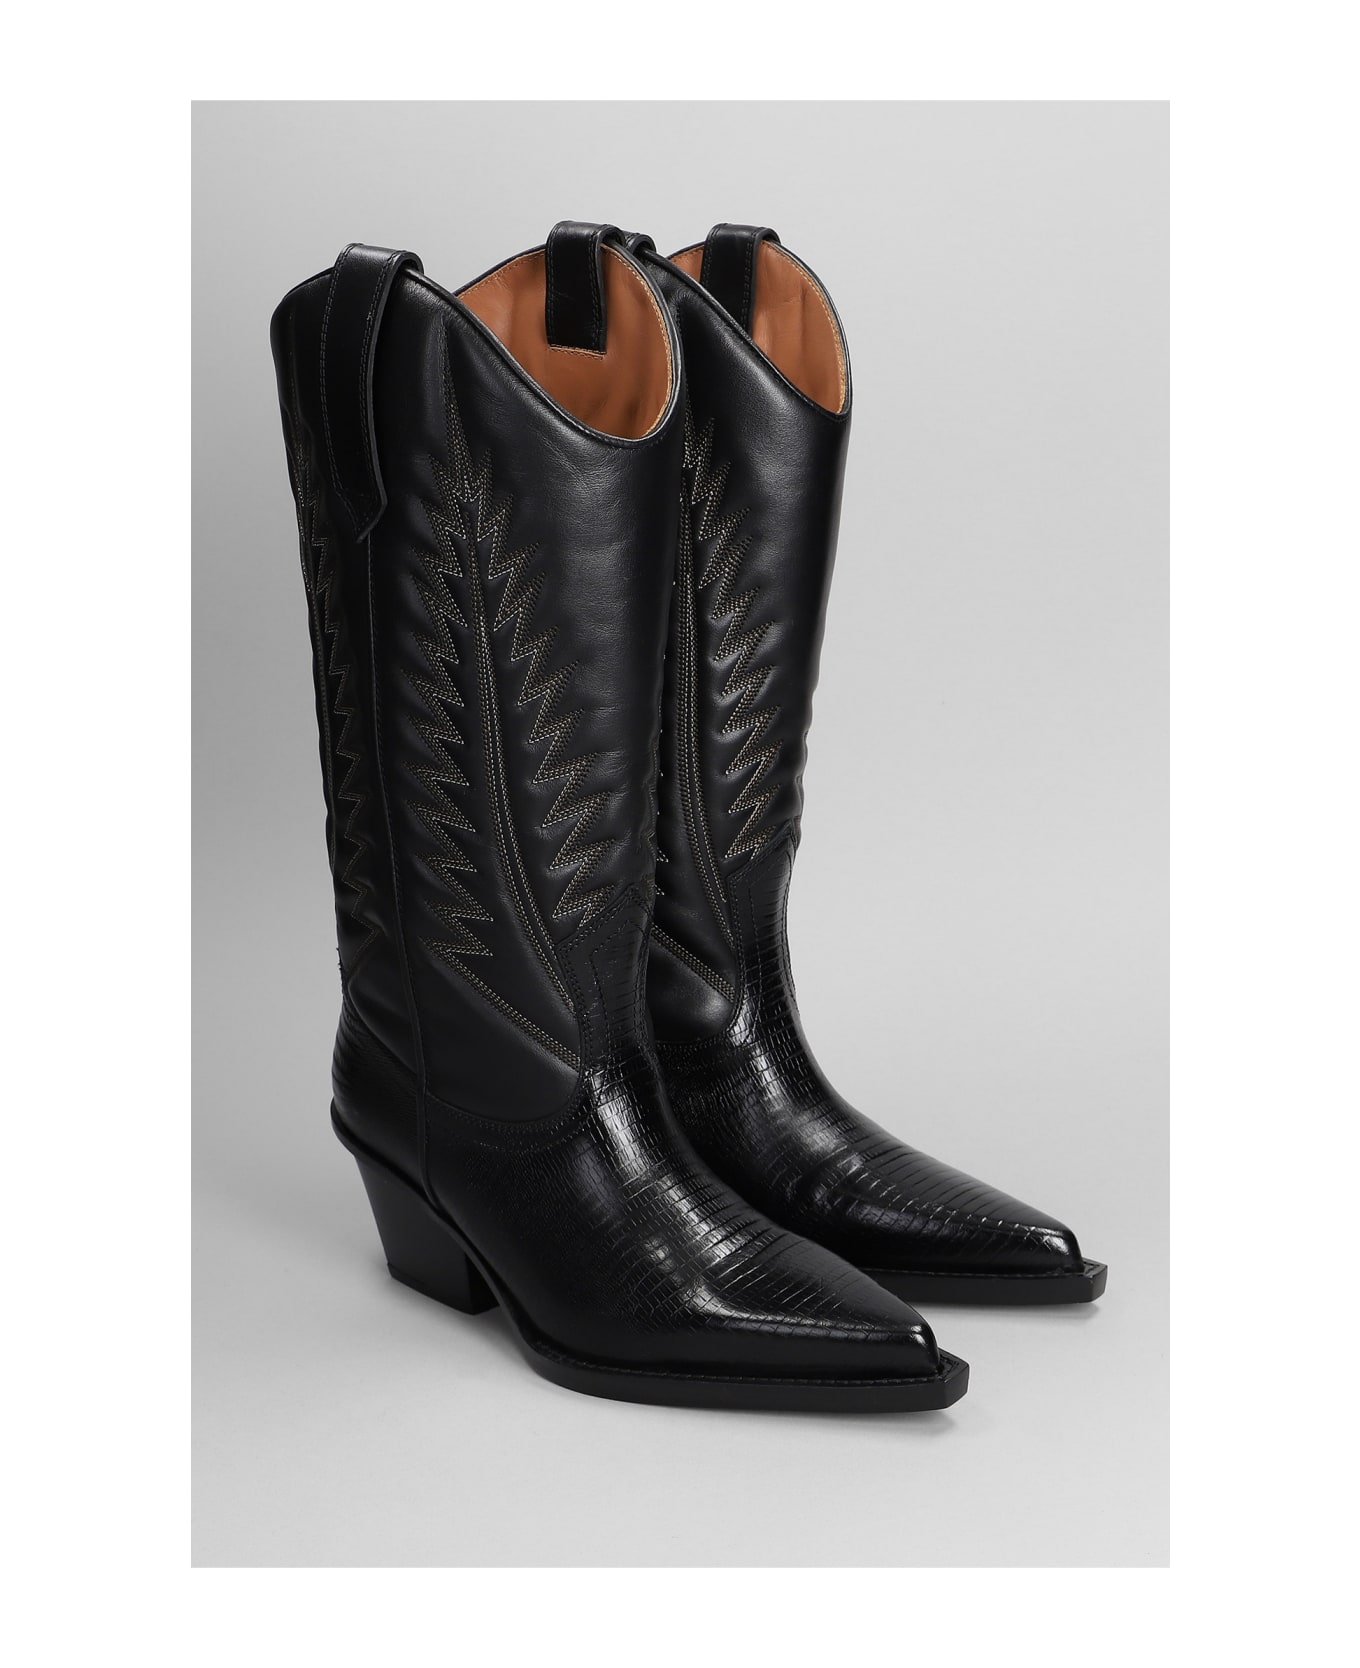 Paris Texas Texan Boots In Black Leather - black ブーツ